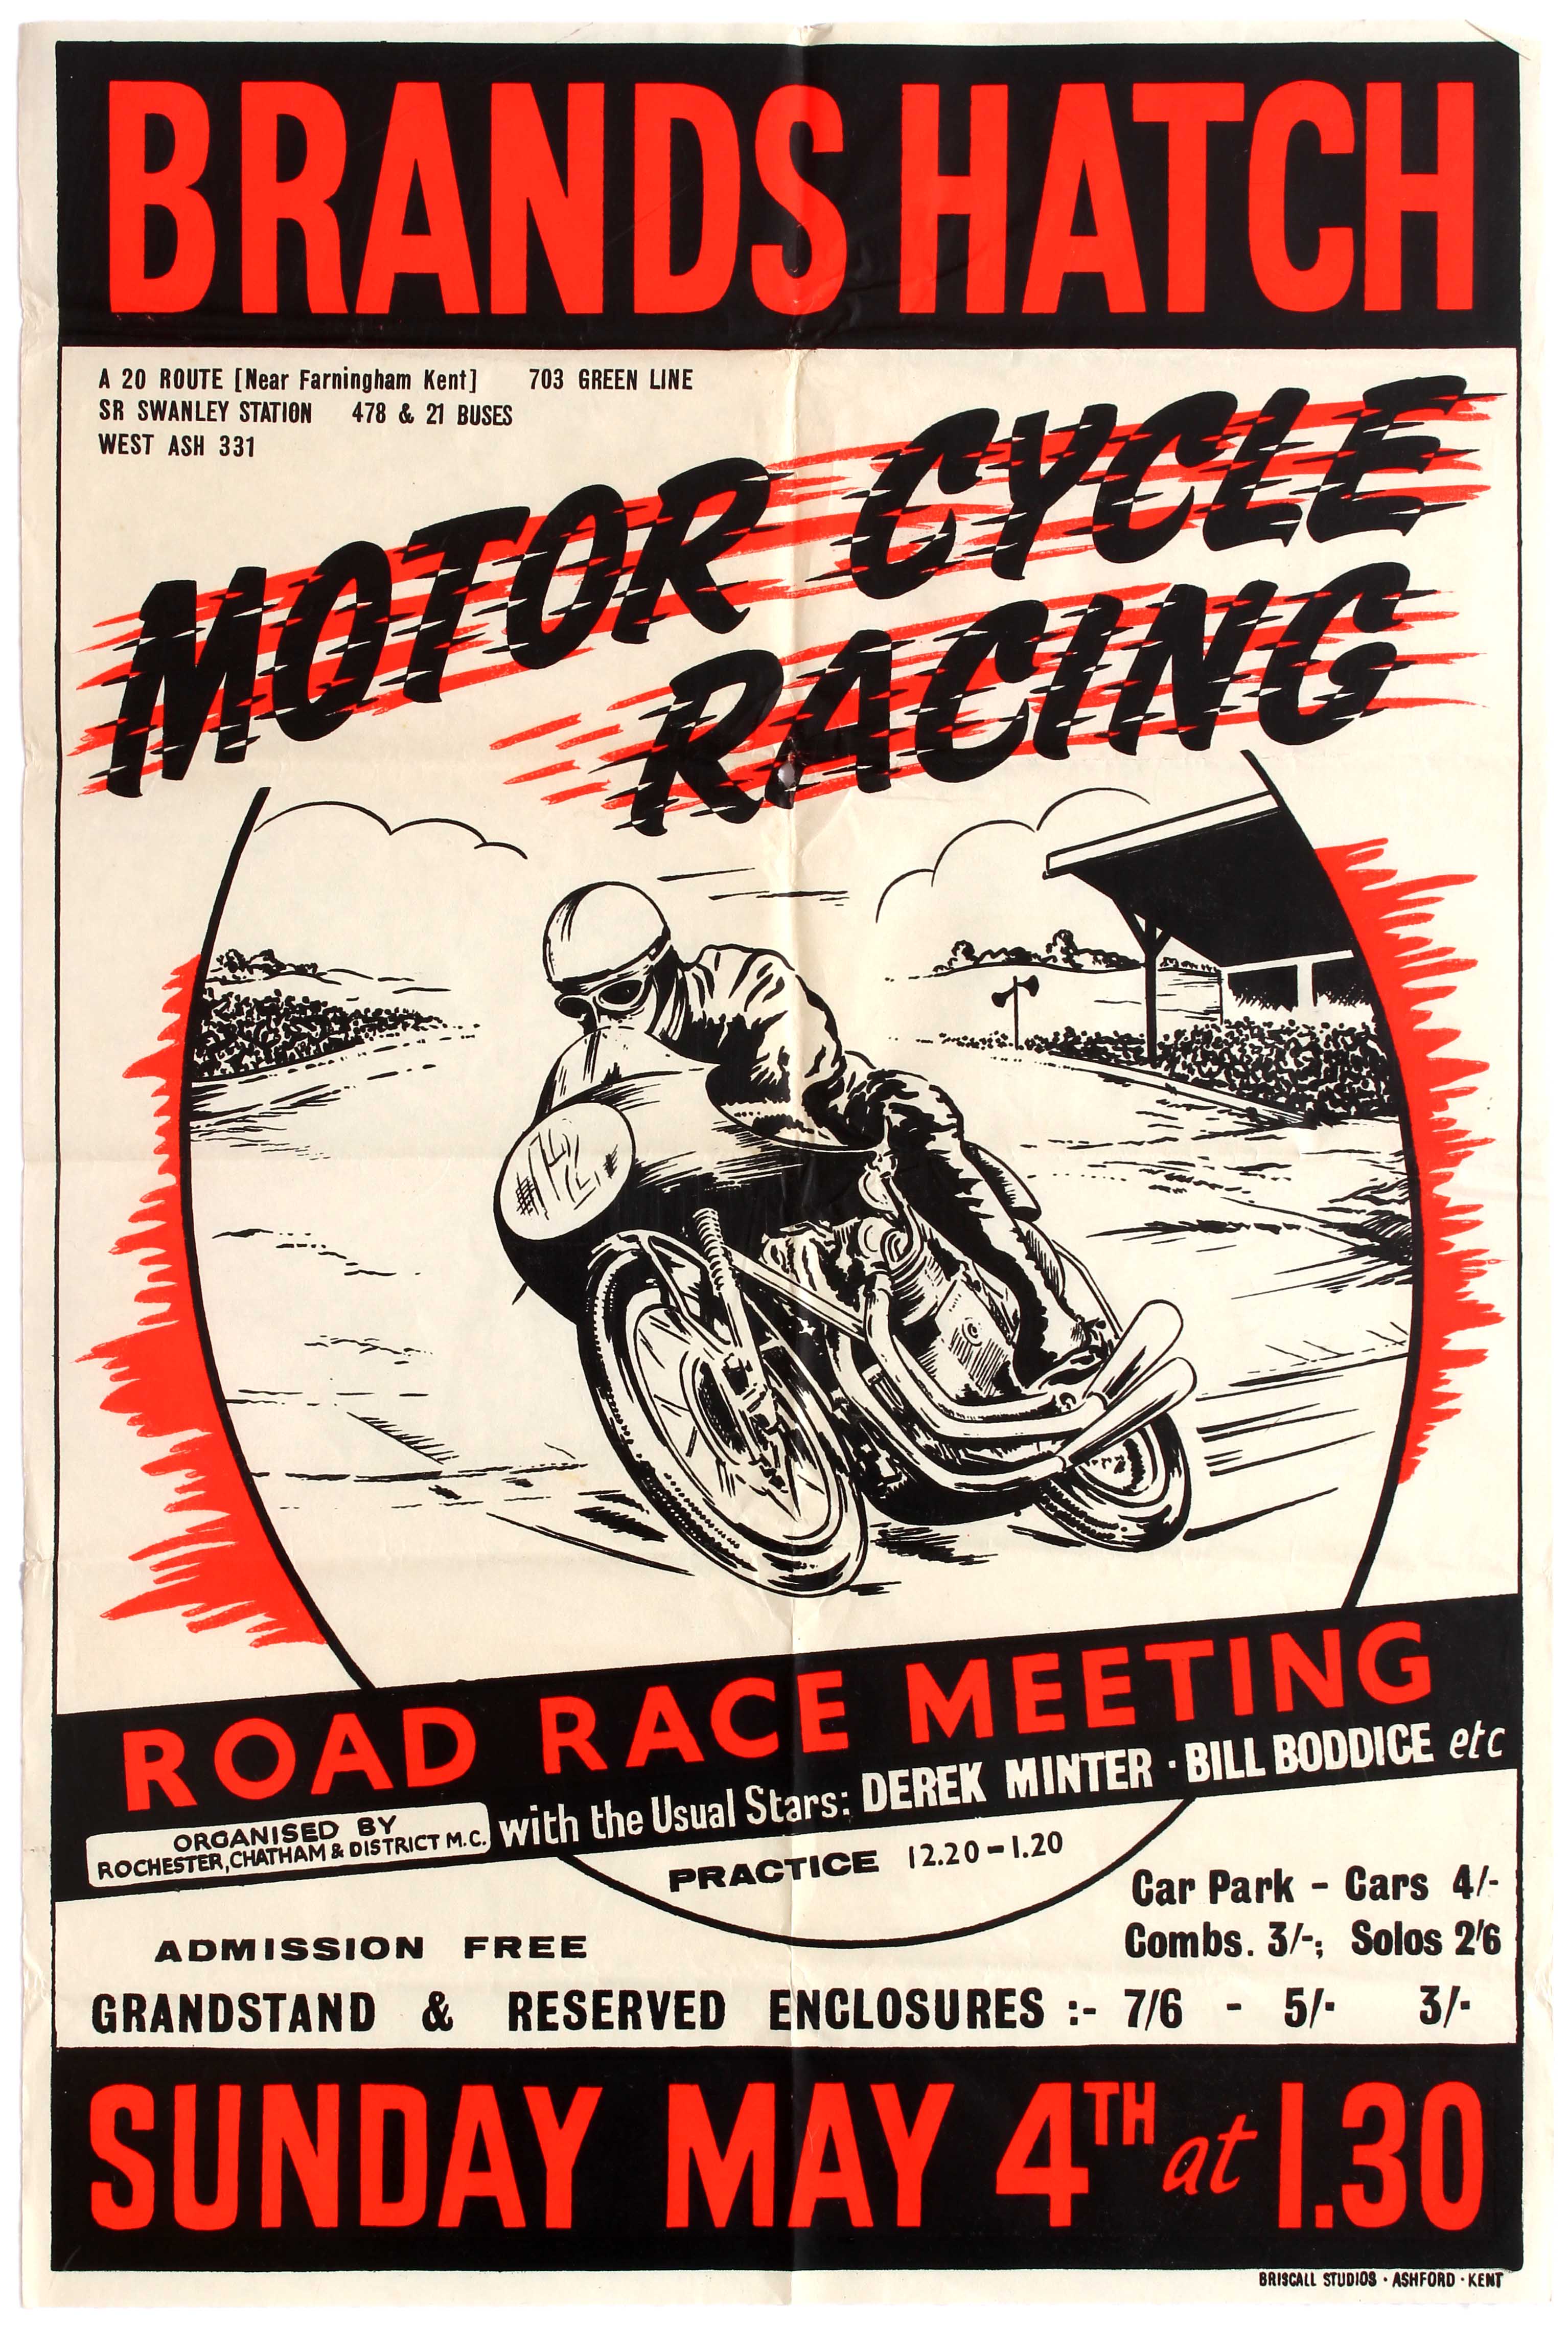 Sport Poster Brands Hatch Motorcycle Road Race Meeting Derek Minter